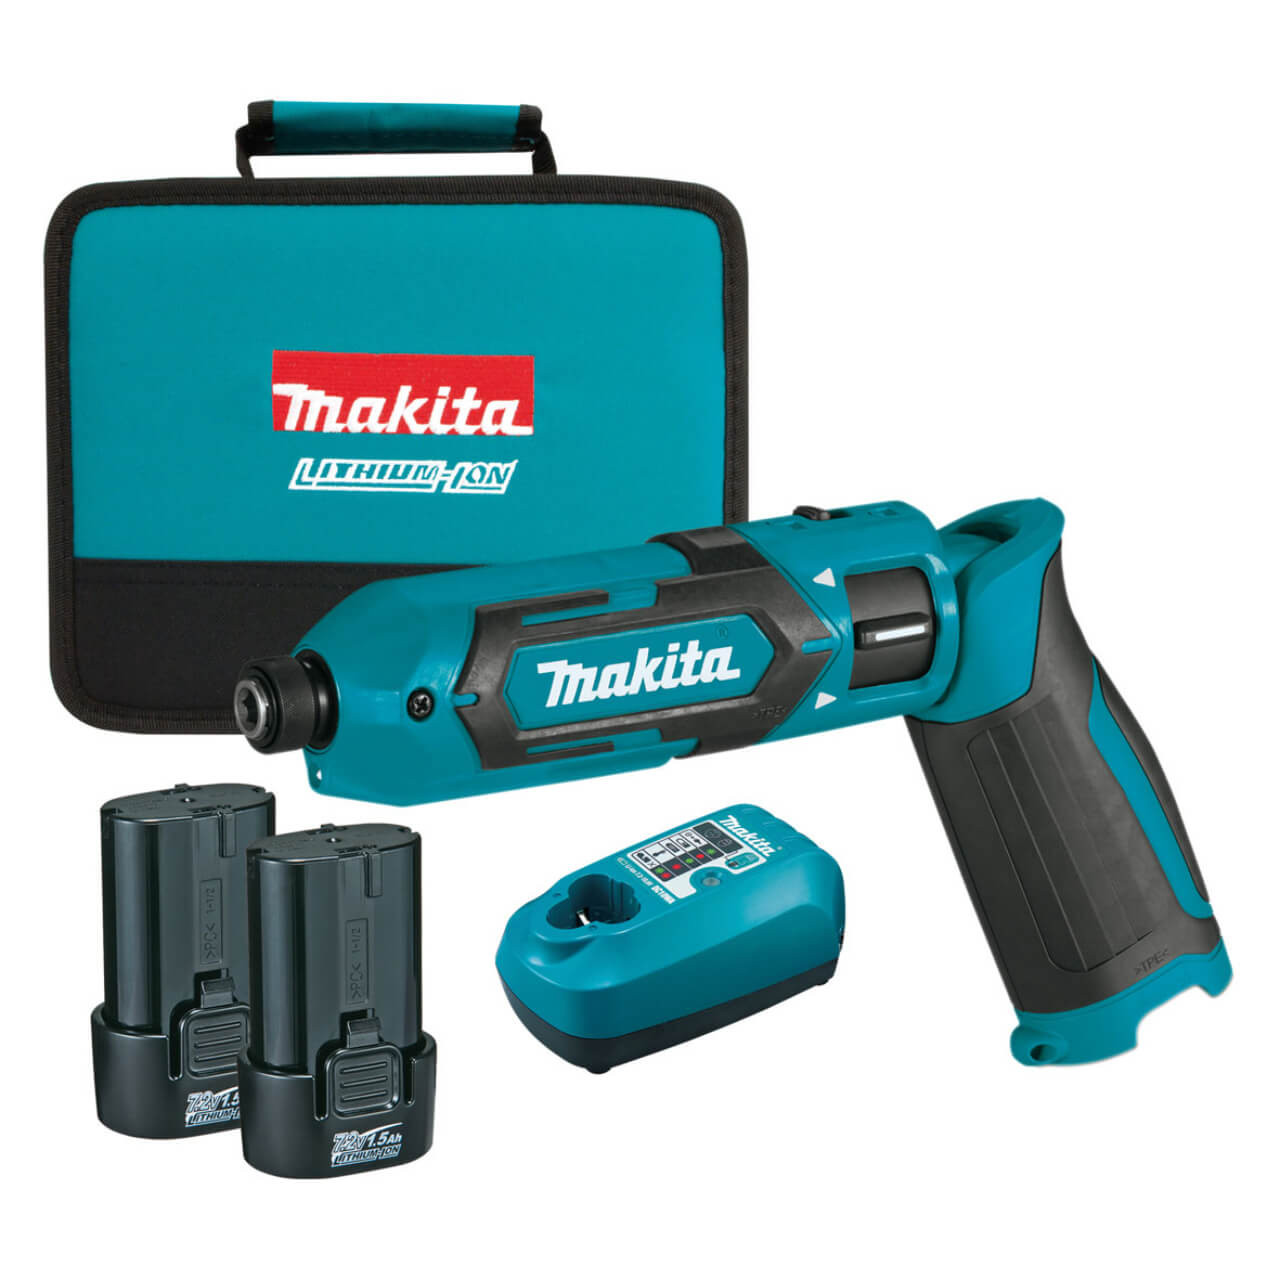 Makita 7.2V Pen Impact Driver Kit - Includes 2 x 1.5Ah Batteries. Charger & Carry Bag